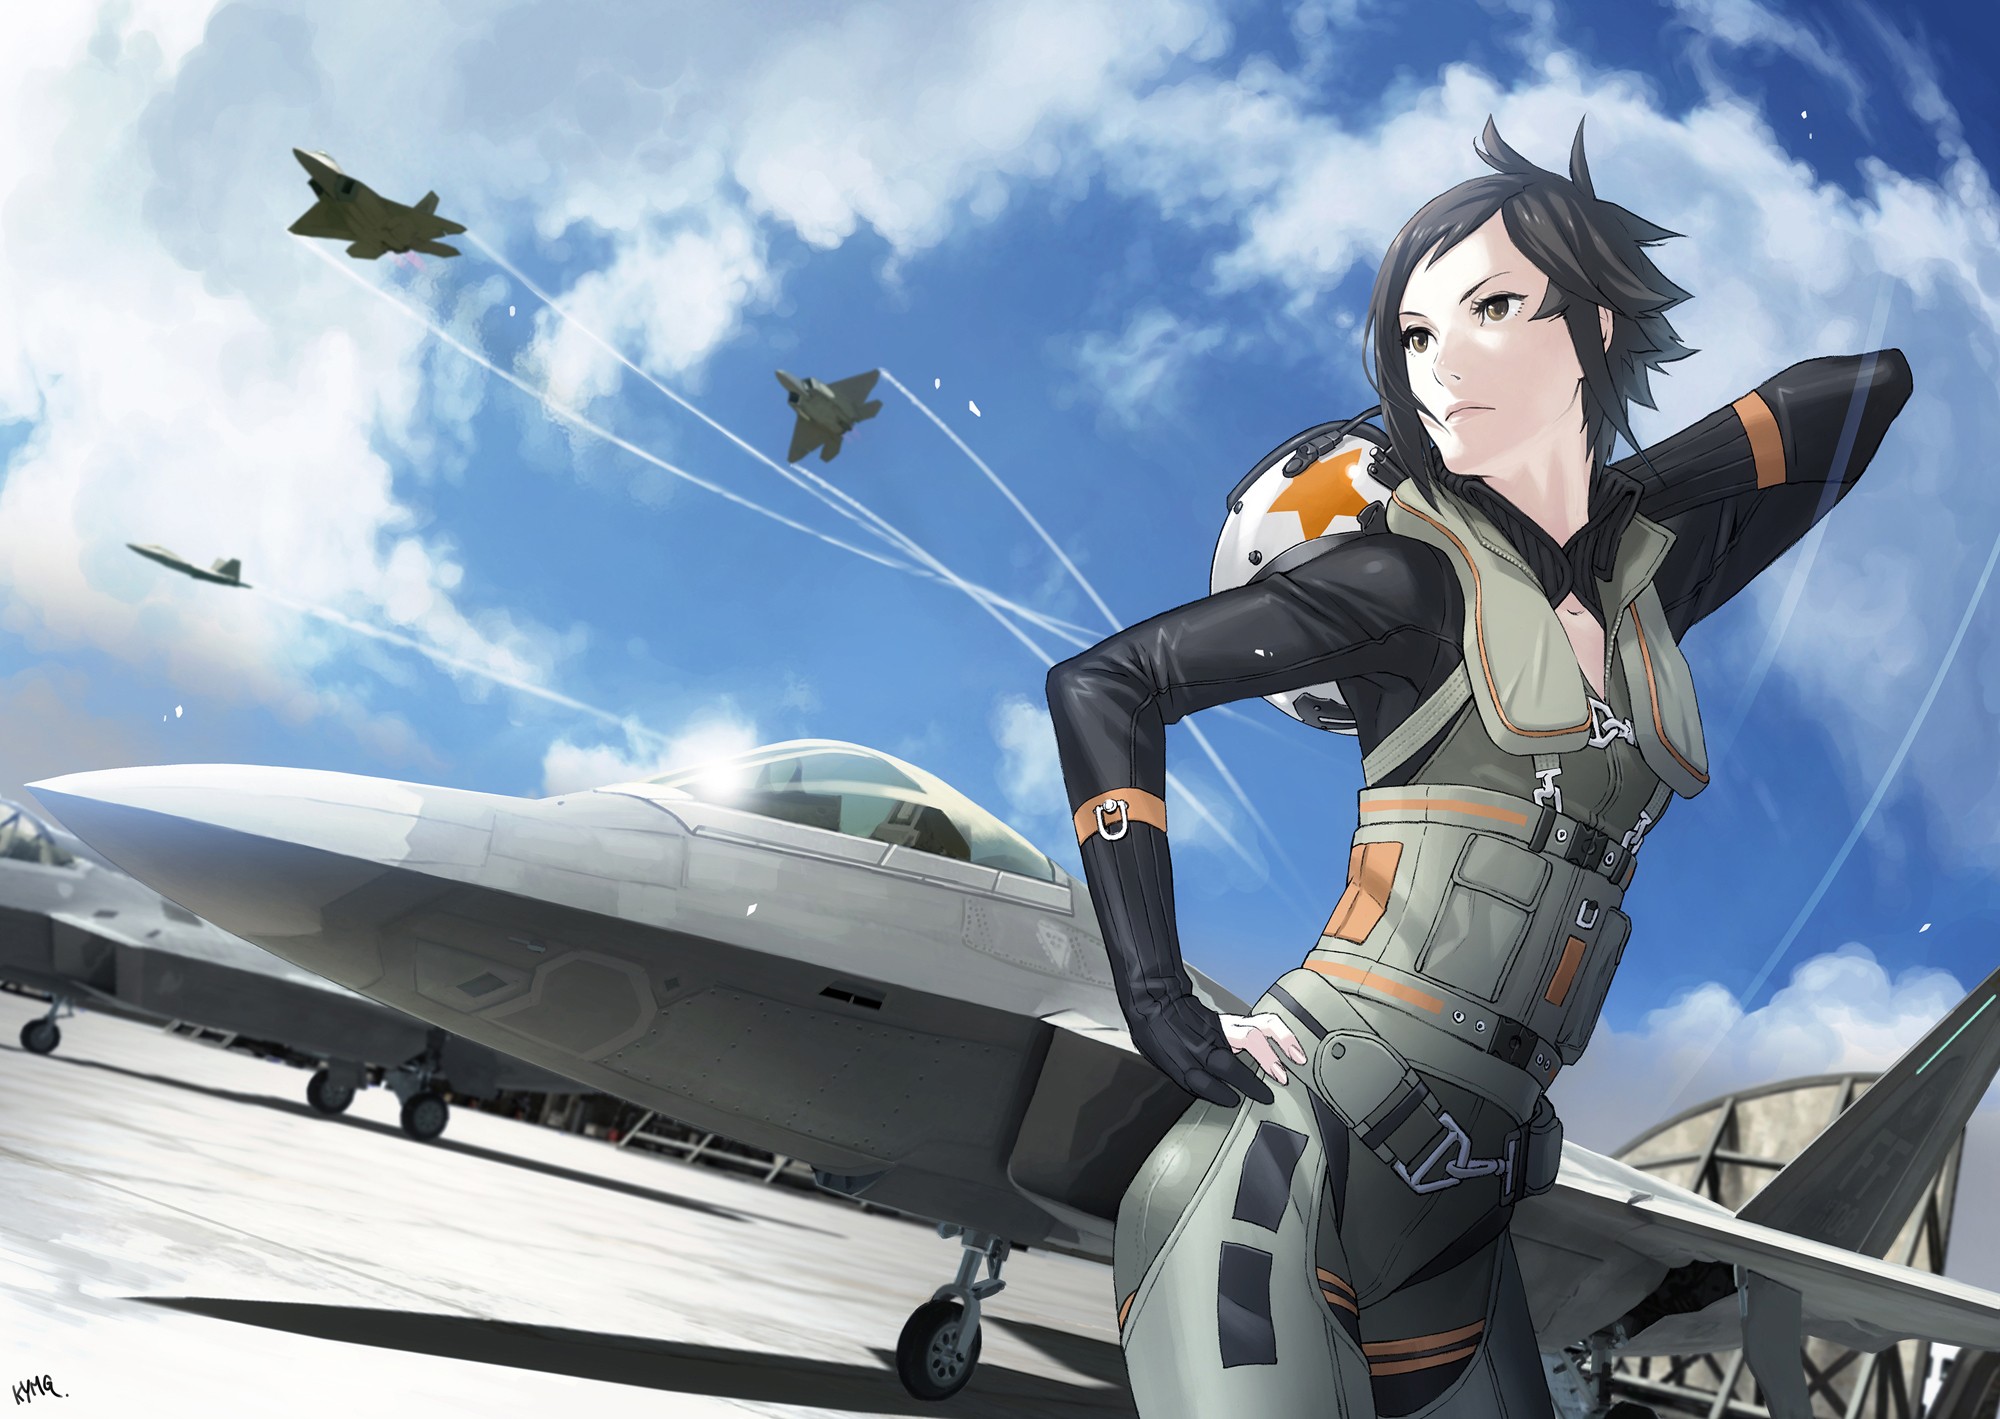 Anime 2000x1419 anime anime girls F-22 Raptor short hair jet fighter Ace Combat Kei Nagase video game art military aircraft video games video game girls vehicle military vehicle